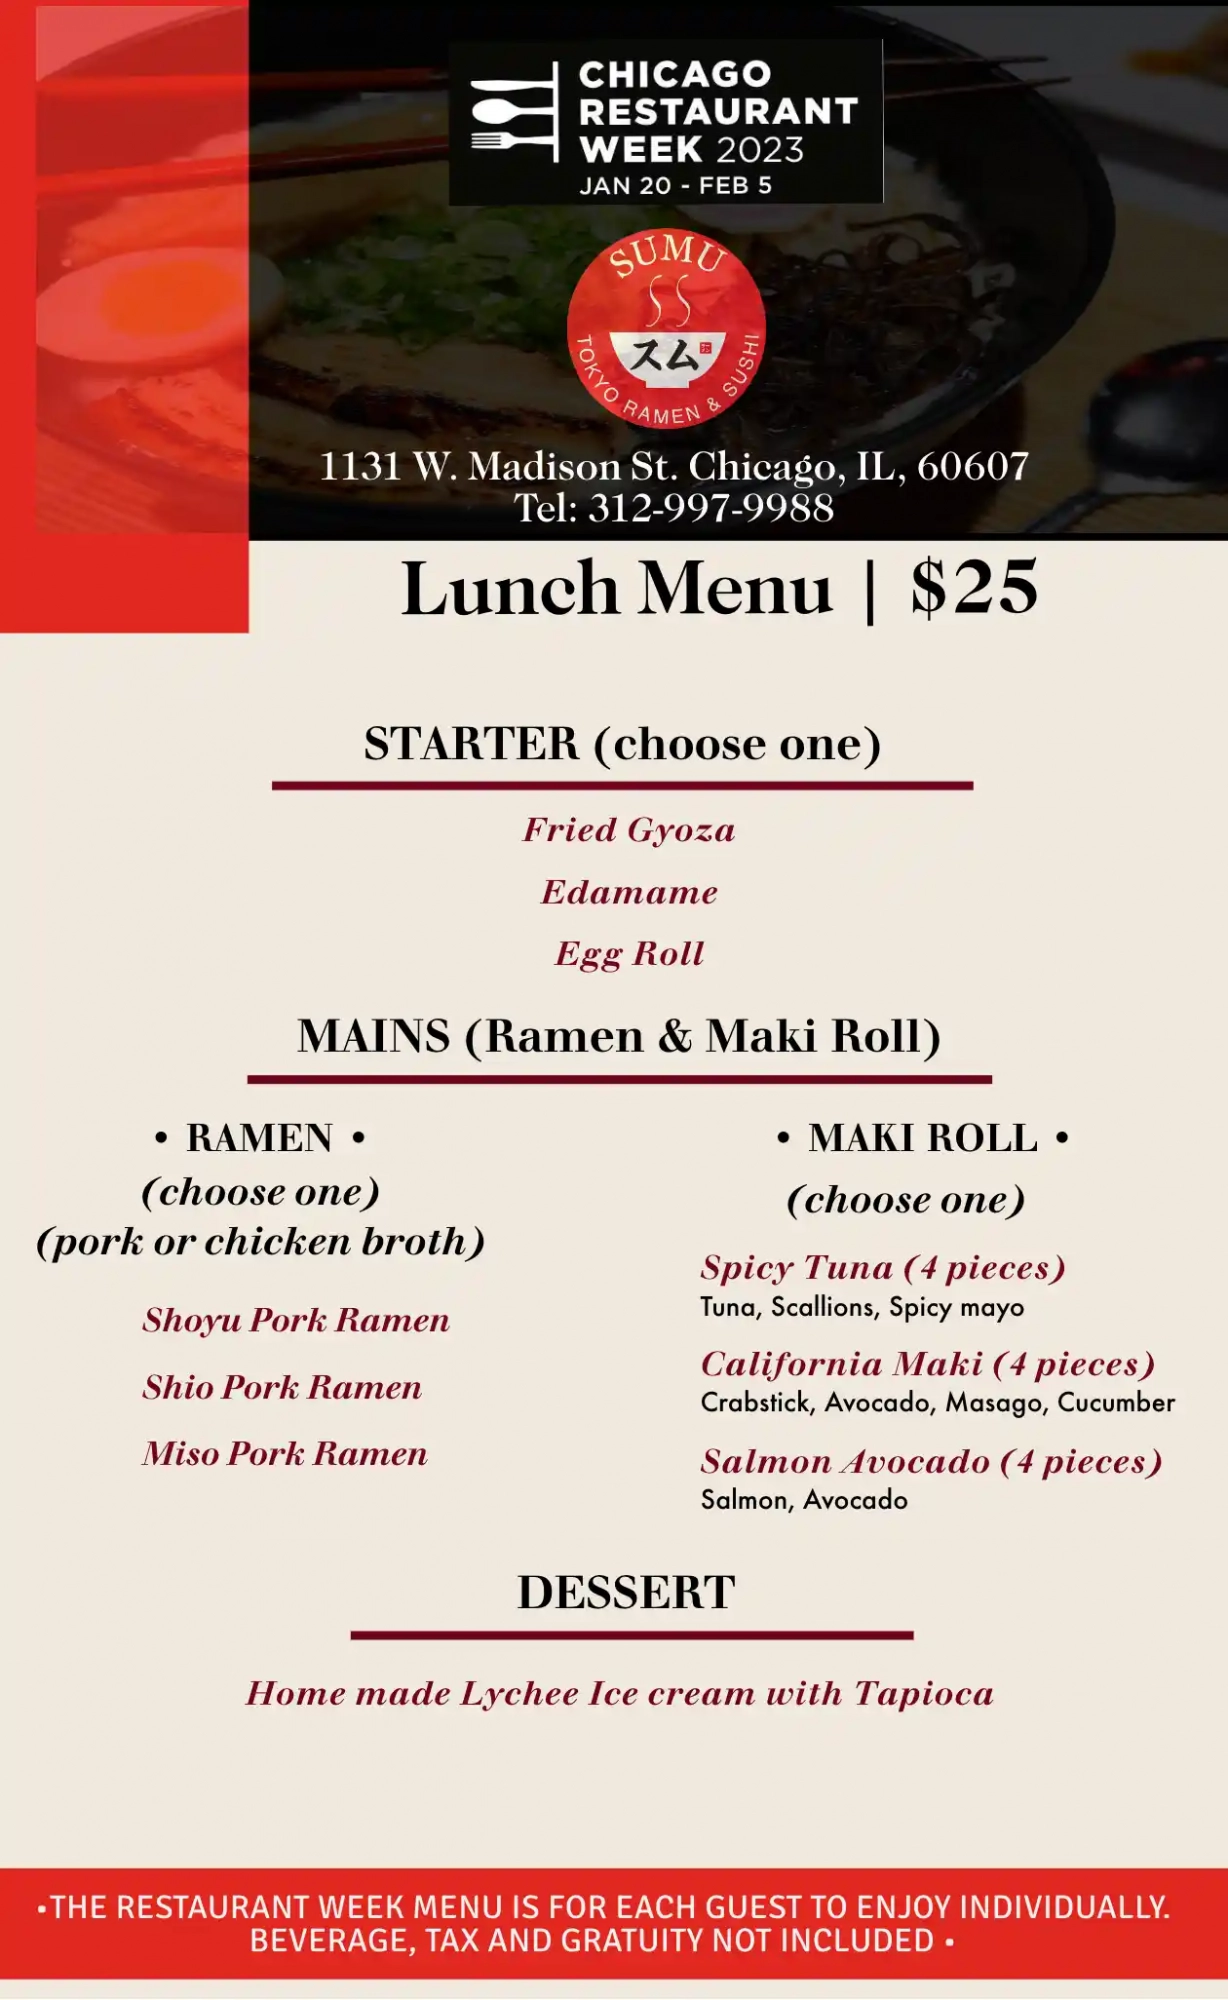 Chicago Restaurant Week 2023 Menu Sumo Tokyo Ramen Sushi Lunch